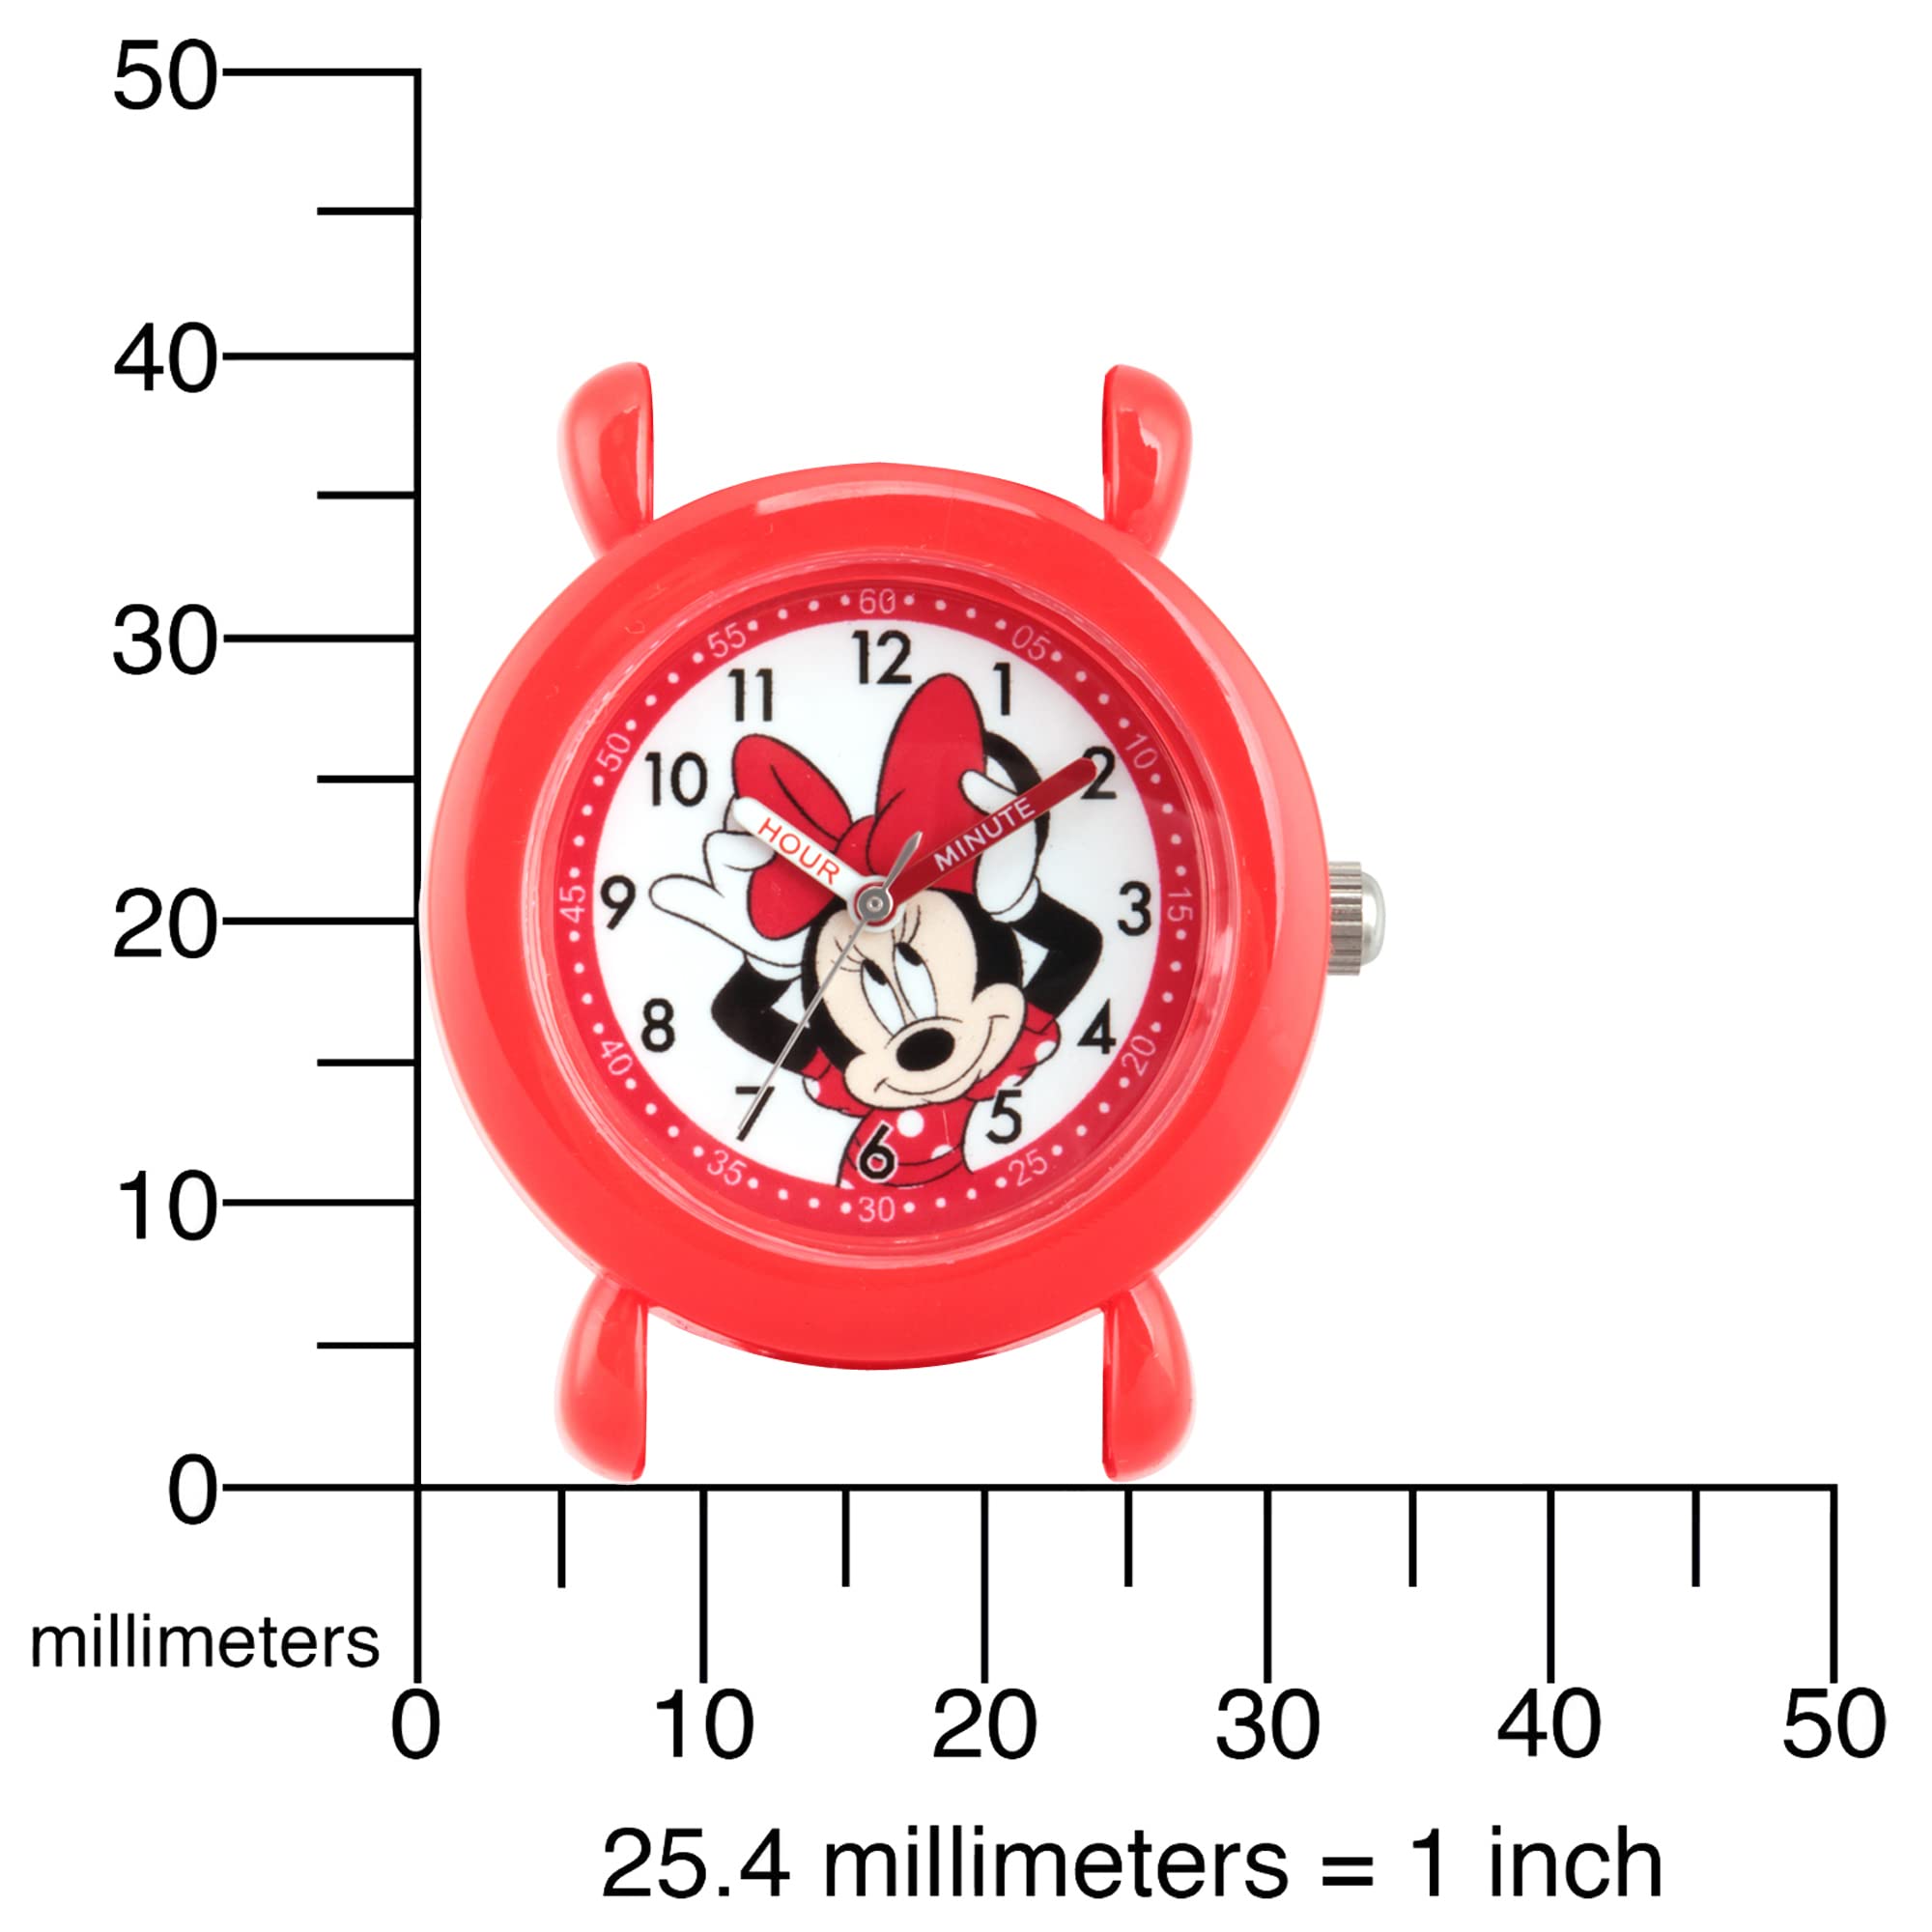 Disney Minnie Mouse Kids' Plastic Time Teacher Analog Quartz Silicone Strap Watch